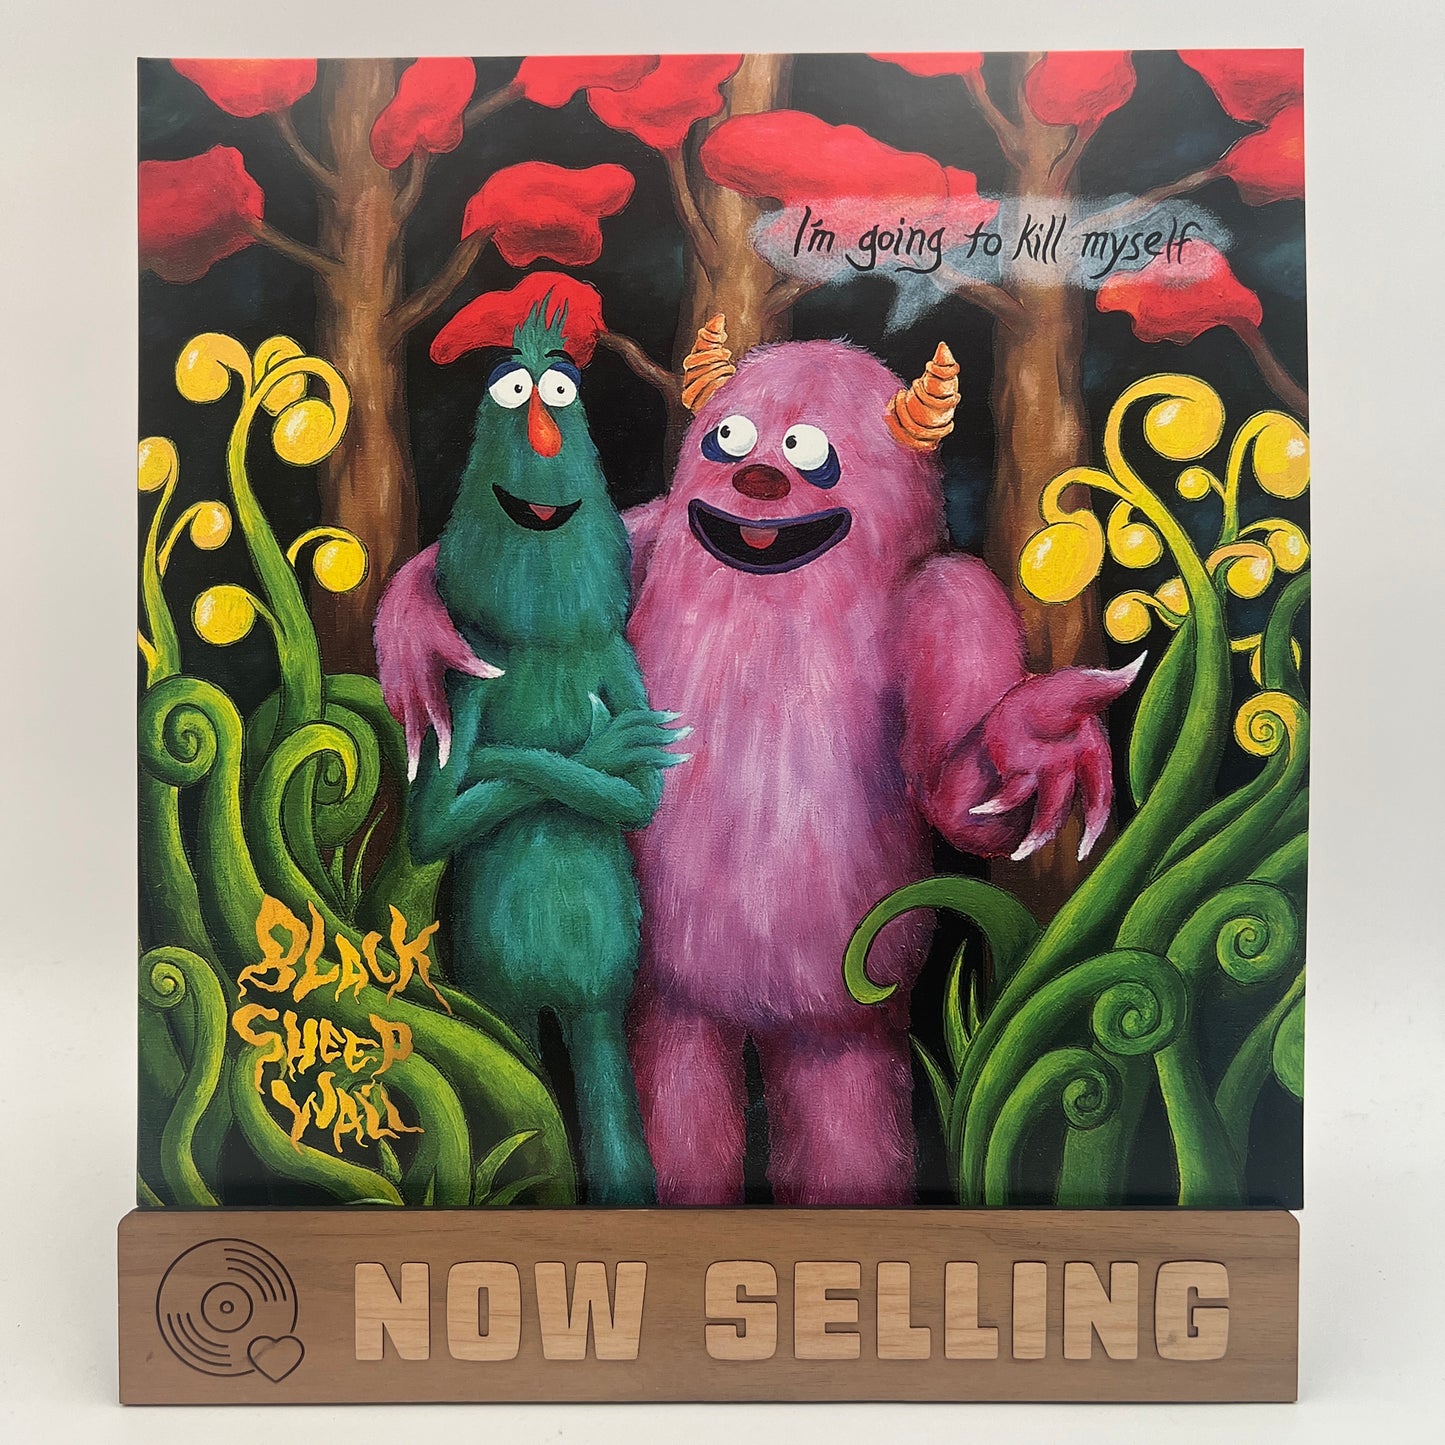 Black Sheep Wall - I'm Going to Kill Myself Vinyl LP Pink / Teal